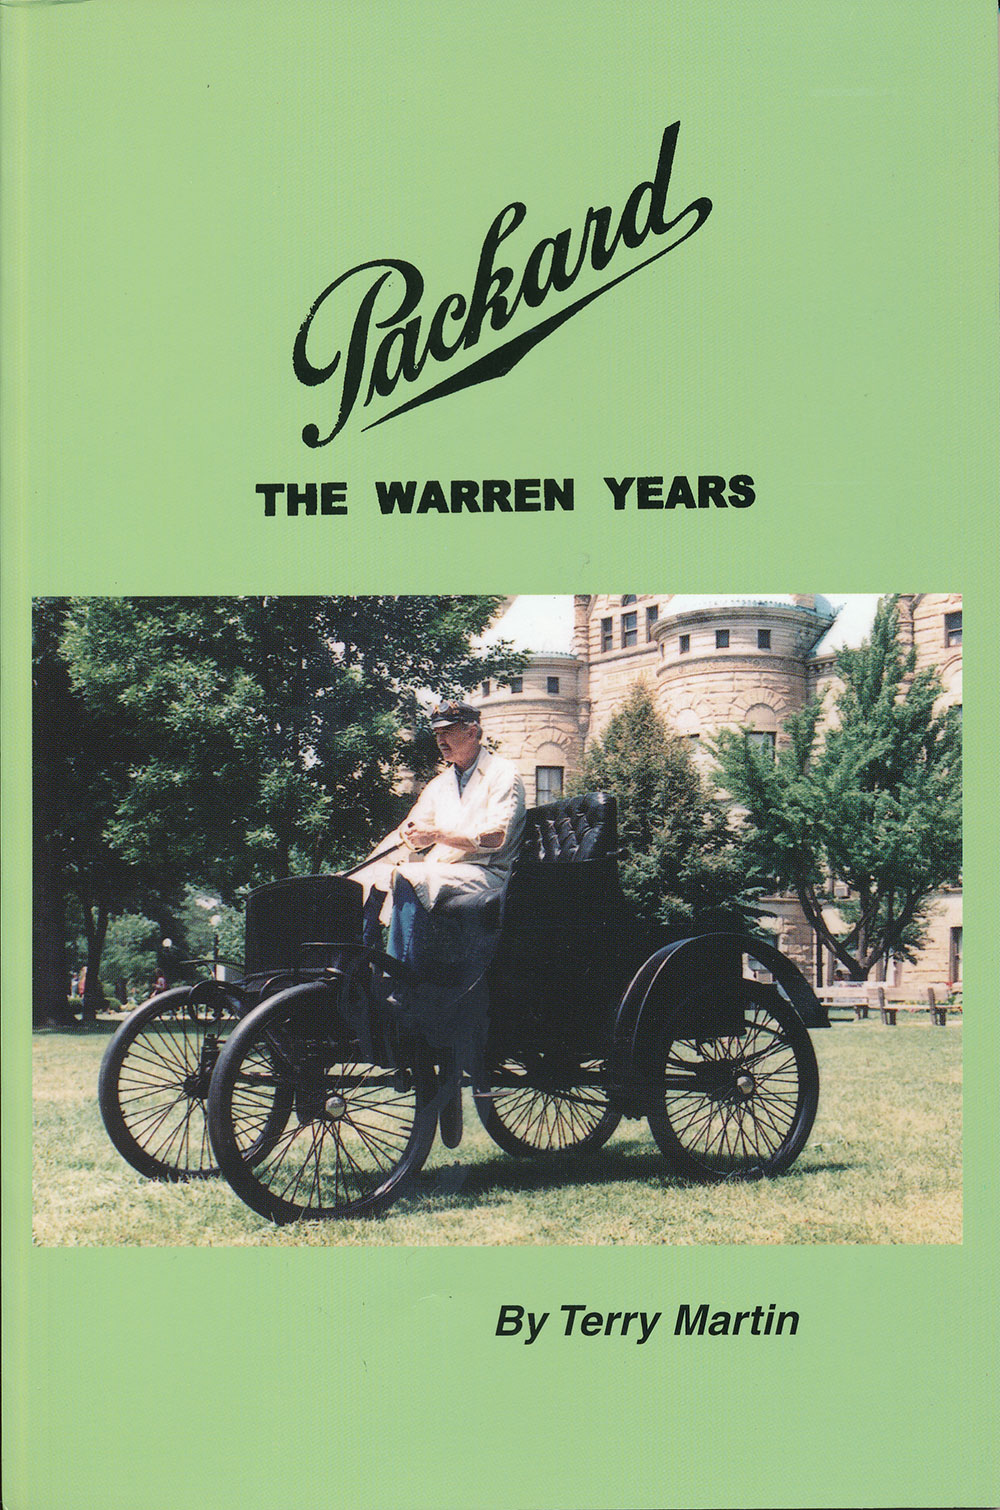 BK-04, Packard, The Warren Years by Terry Martin